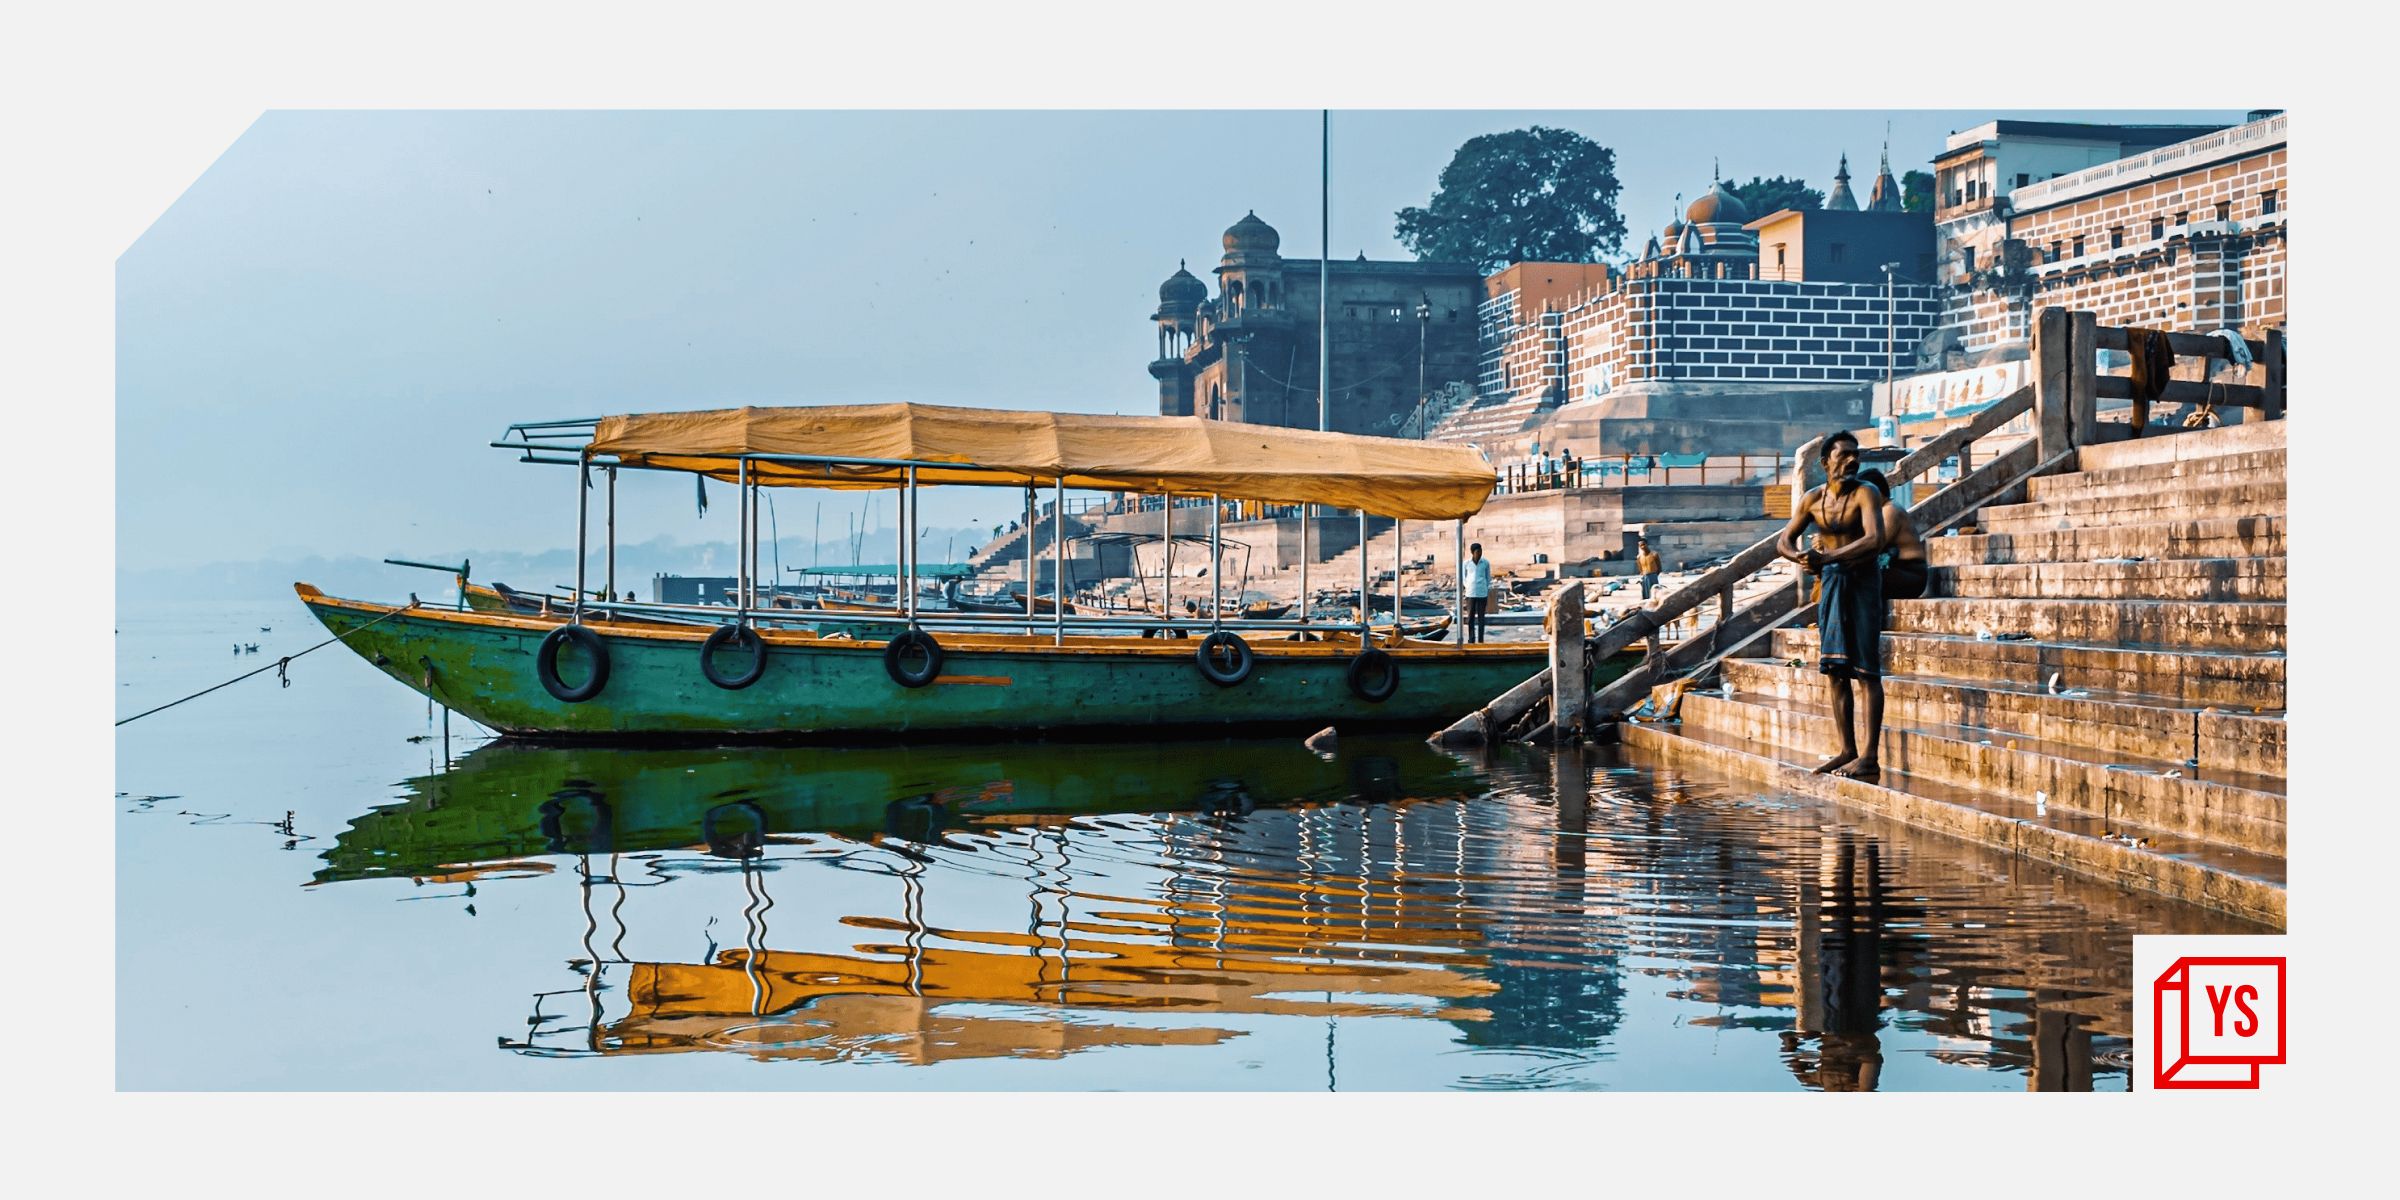 Jewels of India: 7 reasons you should visit Varanasi
